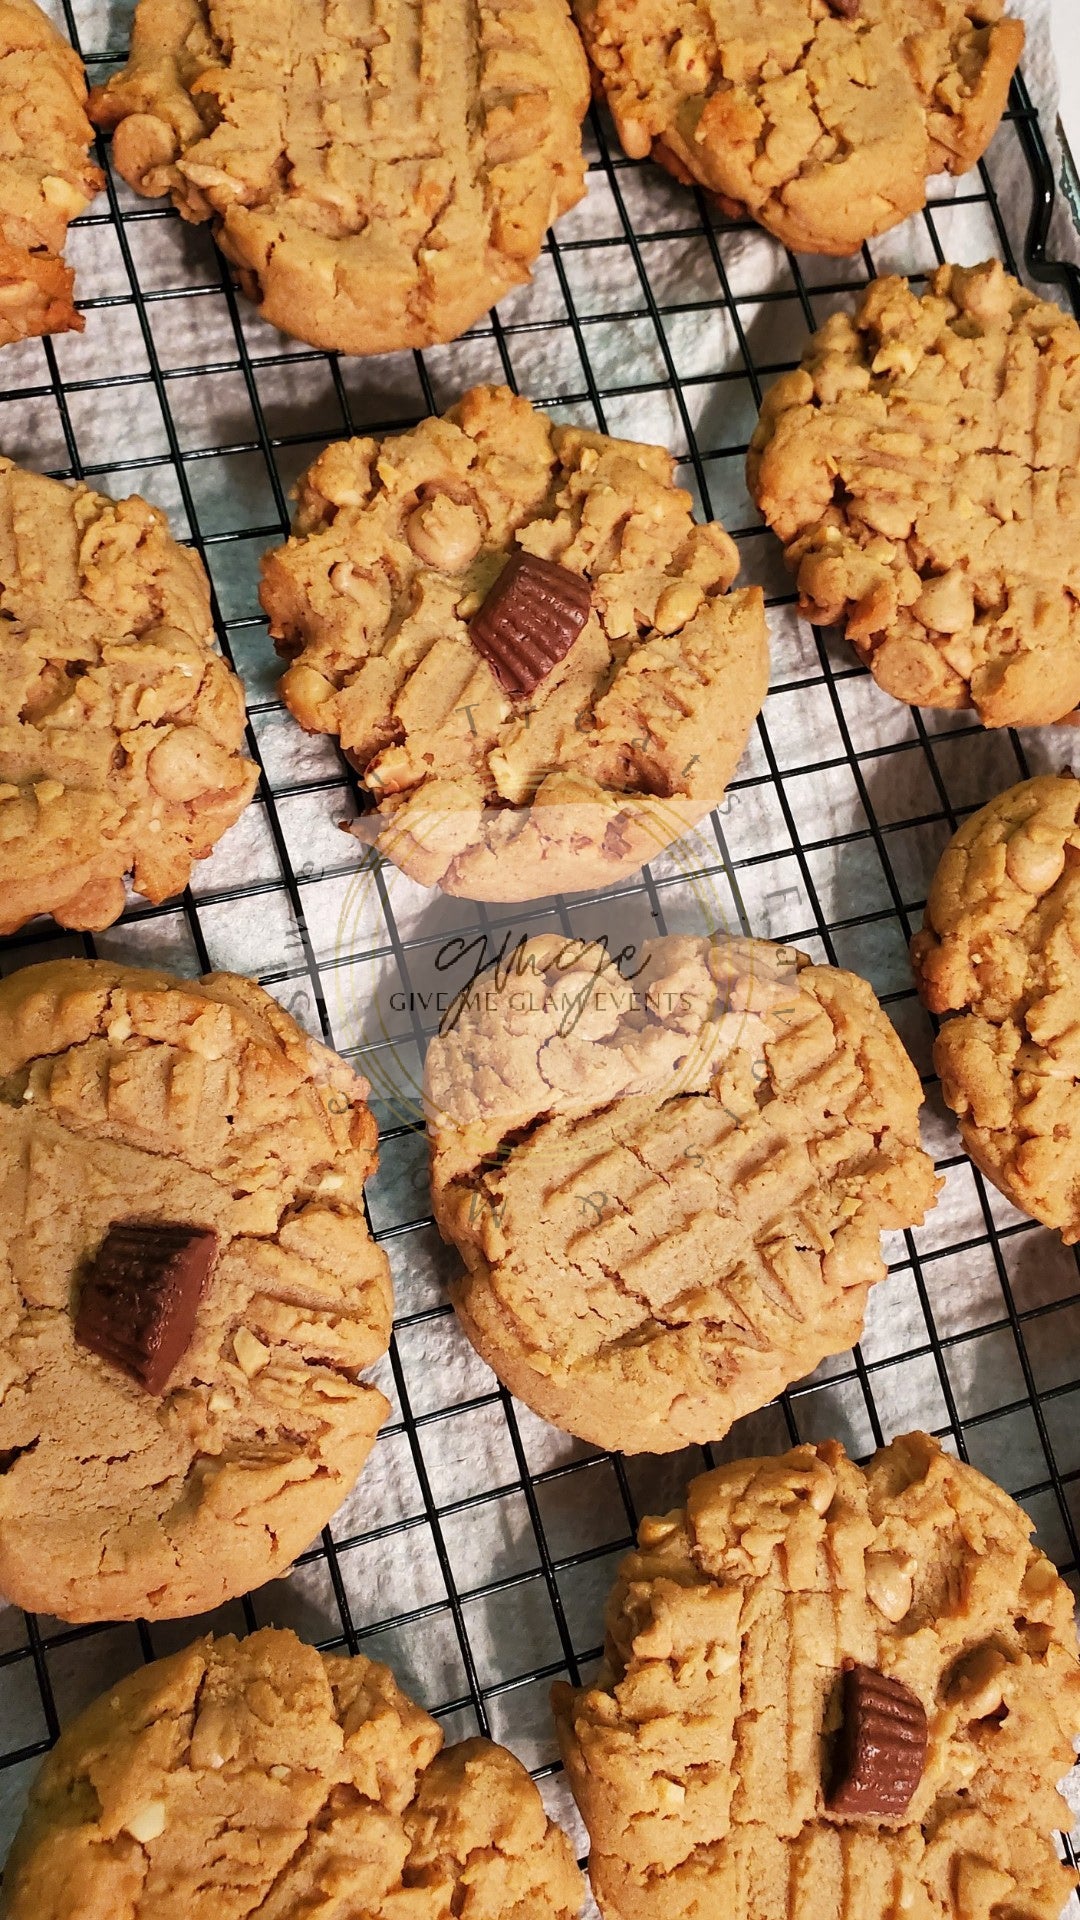 Gourmet Chunky Peanut Butter Cookies 1 Dozen (12ct)